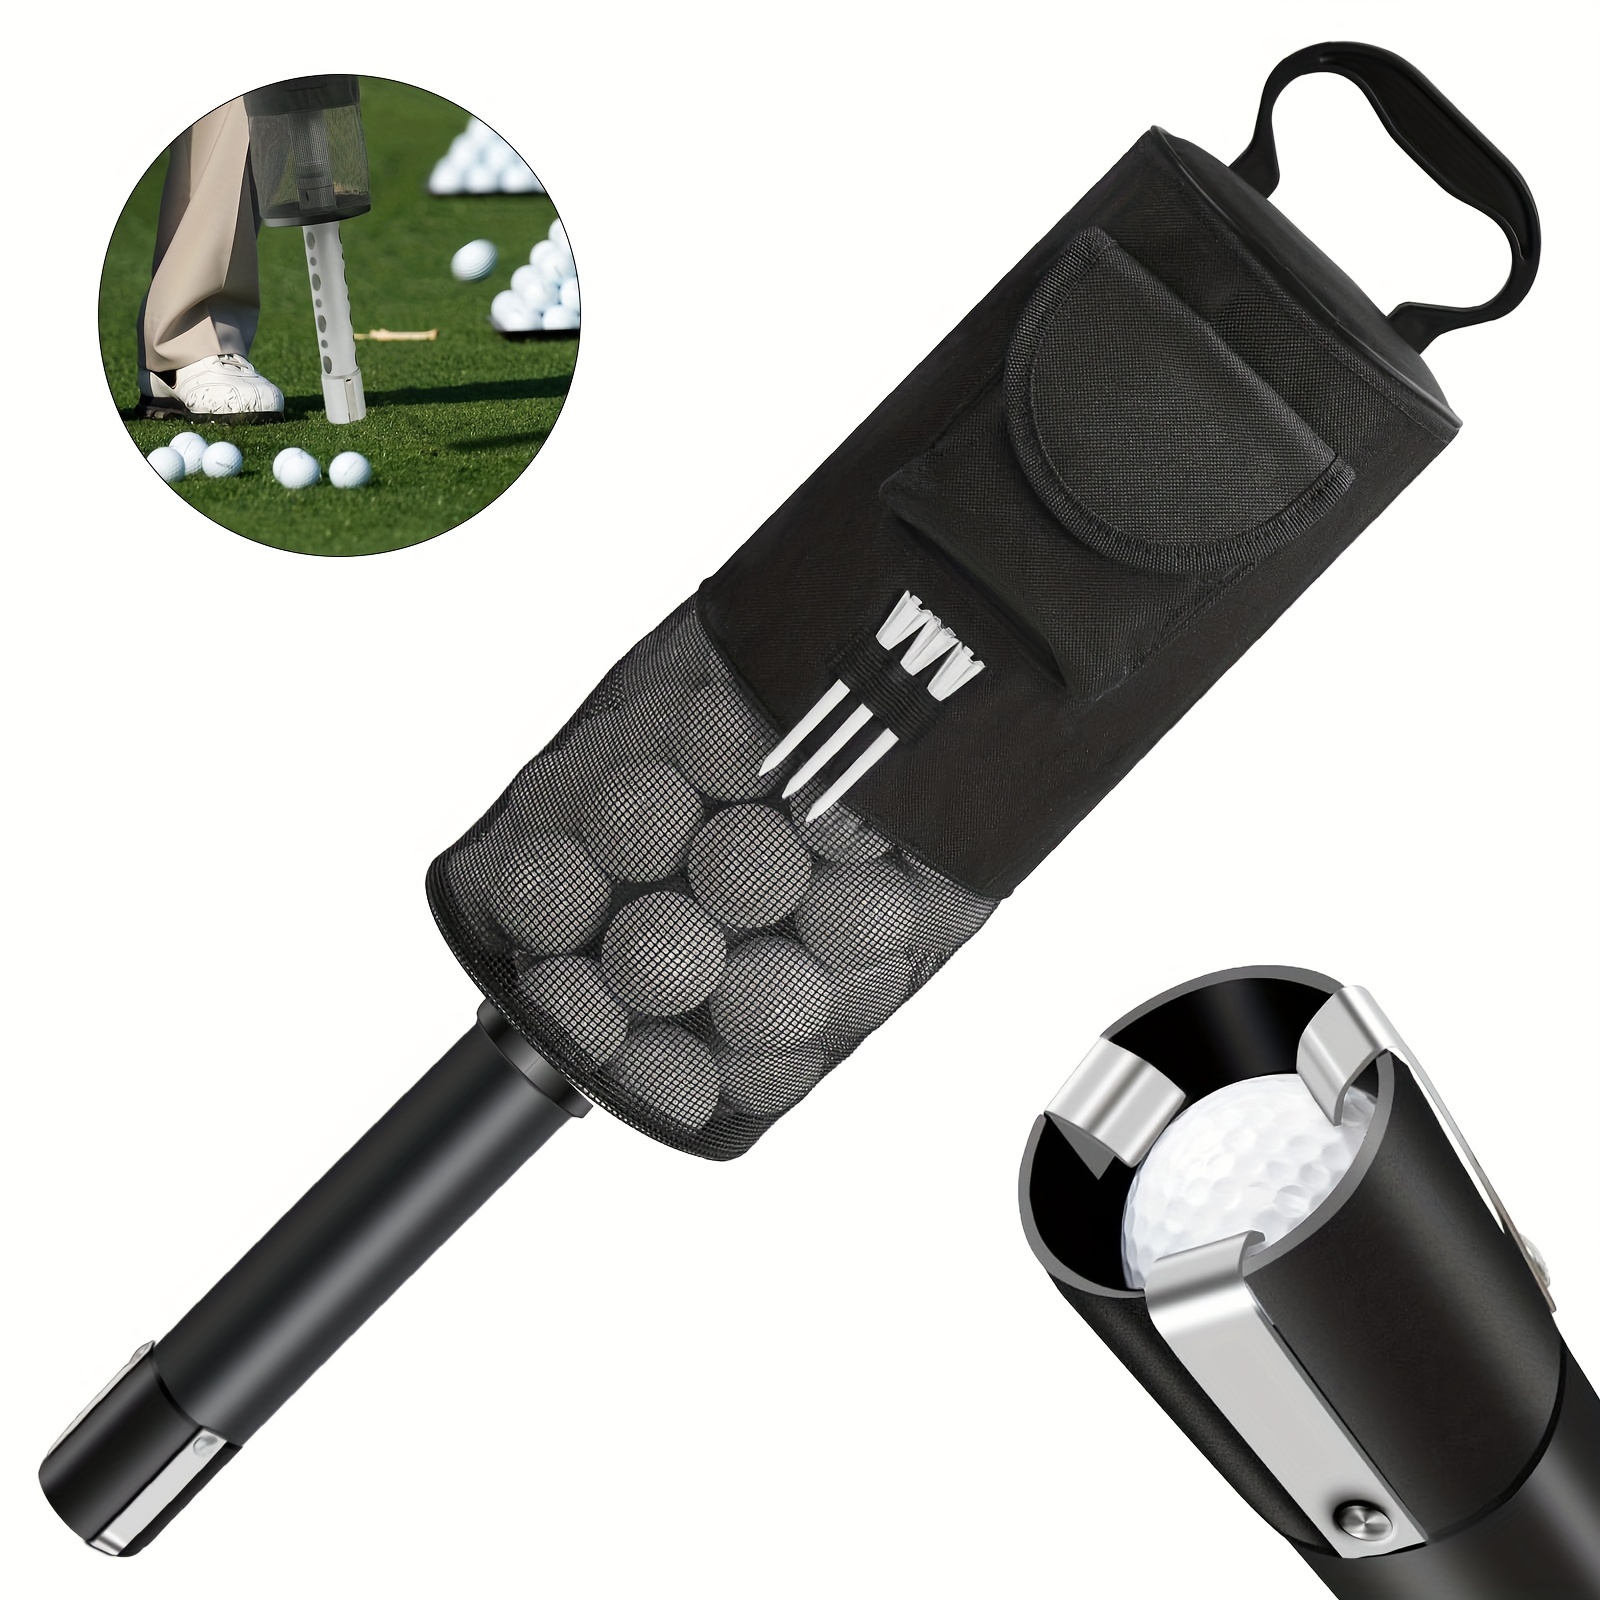 Telescopic Golf Ball Retriever with Golf Ball Cleaner Pouch. Fun